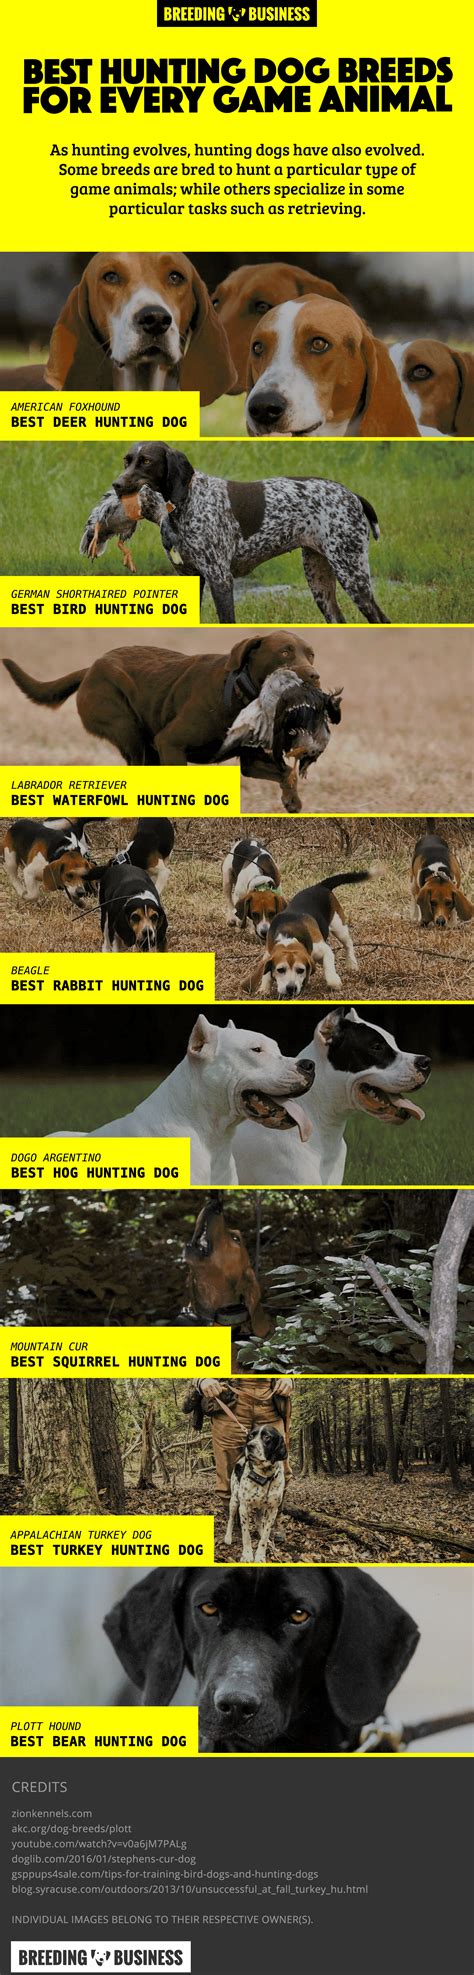 Lista De Las Mejores Razas De Perros De Caza Para Cada Animal De Caza